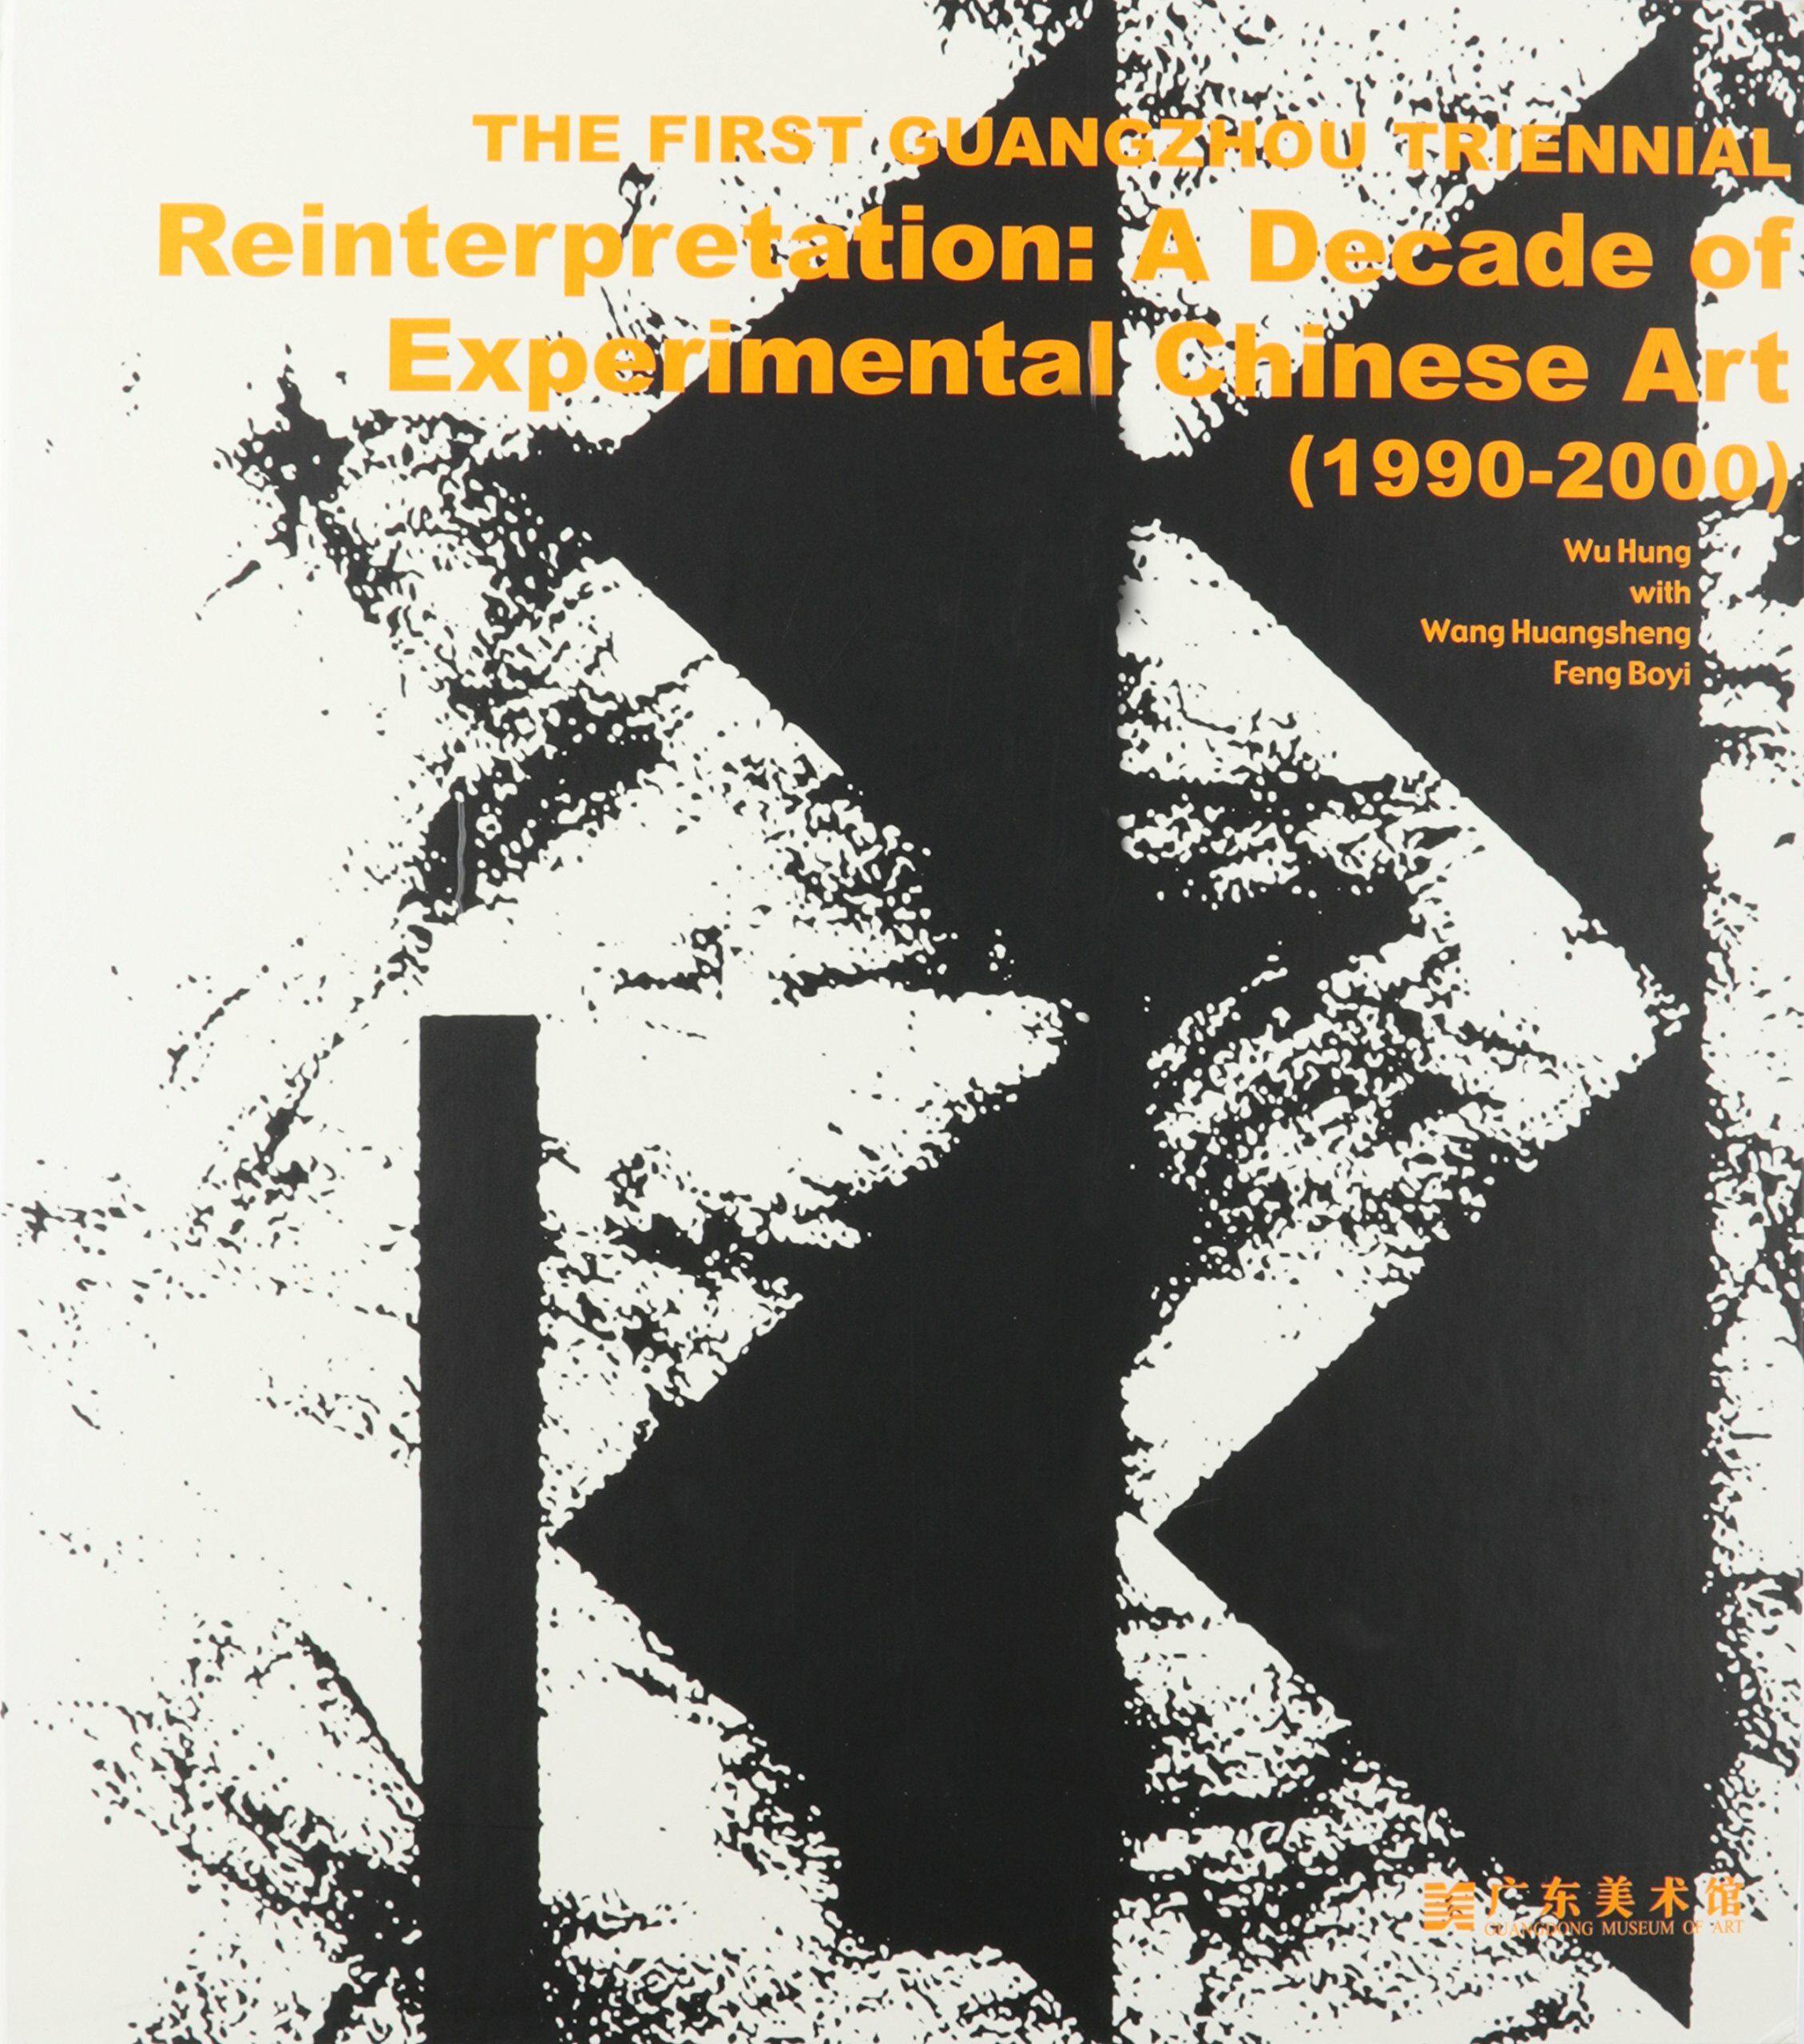 The First Guangzhou Triennial Reinterpretation: A Decade of Experimental Chinese Art 1900-2000 (Hardcover)